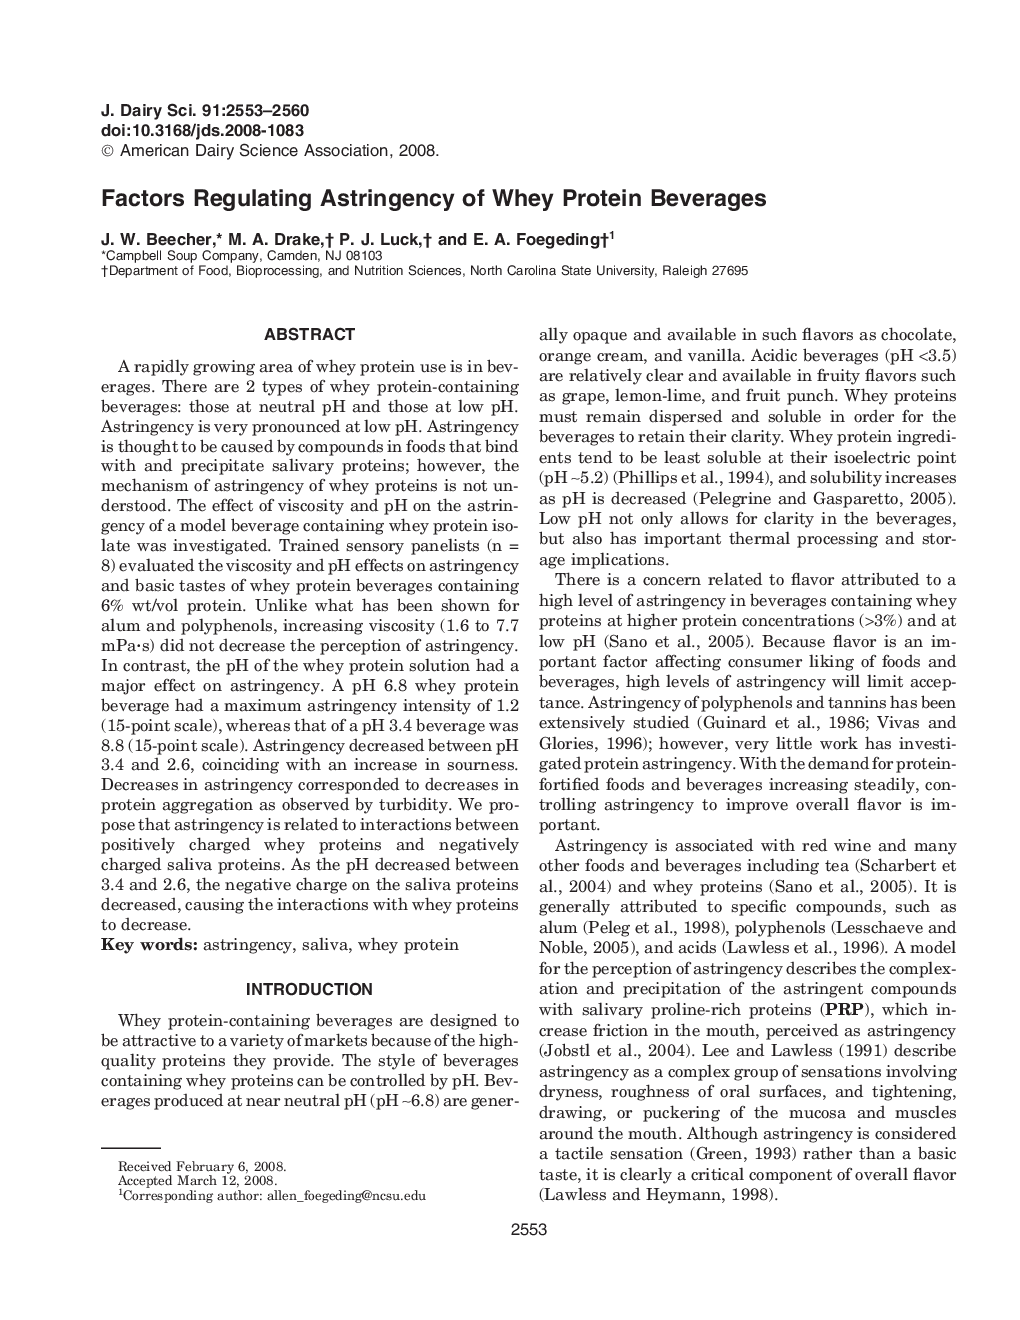 Factors Regulating Astringency of Whey Protein Beverages